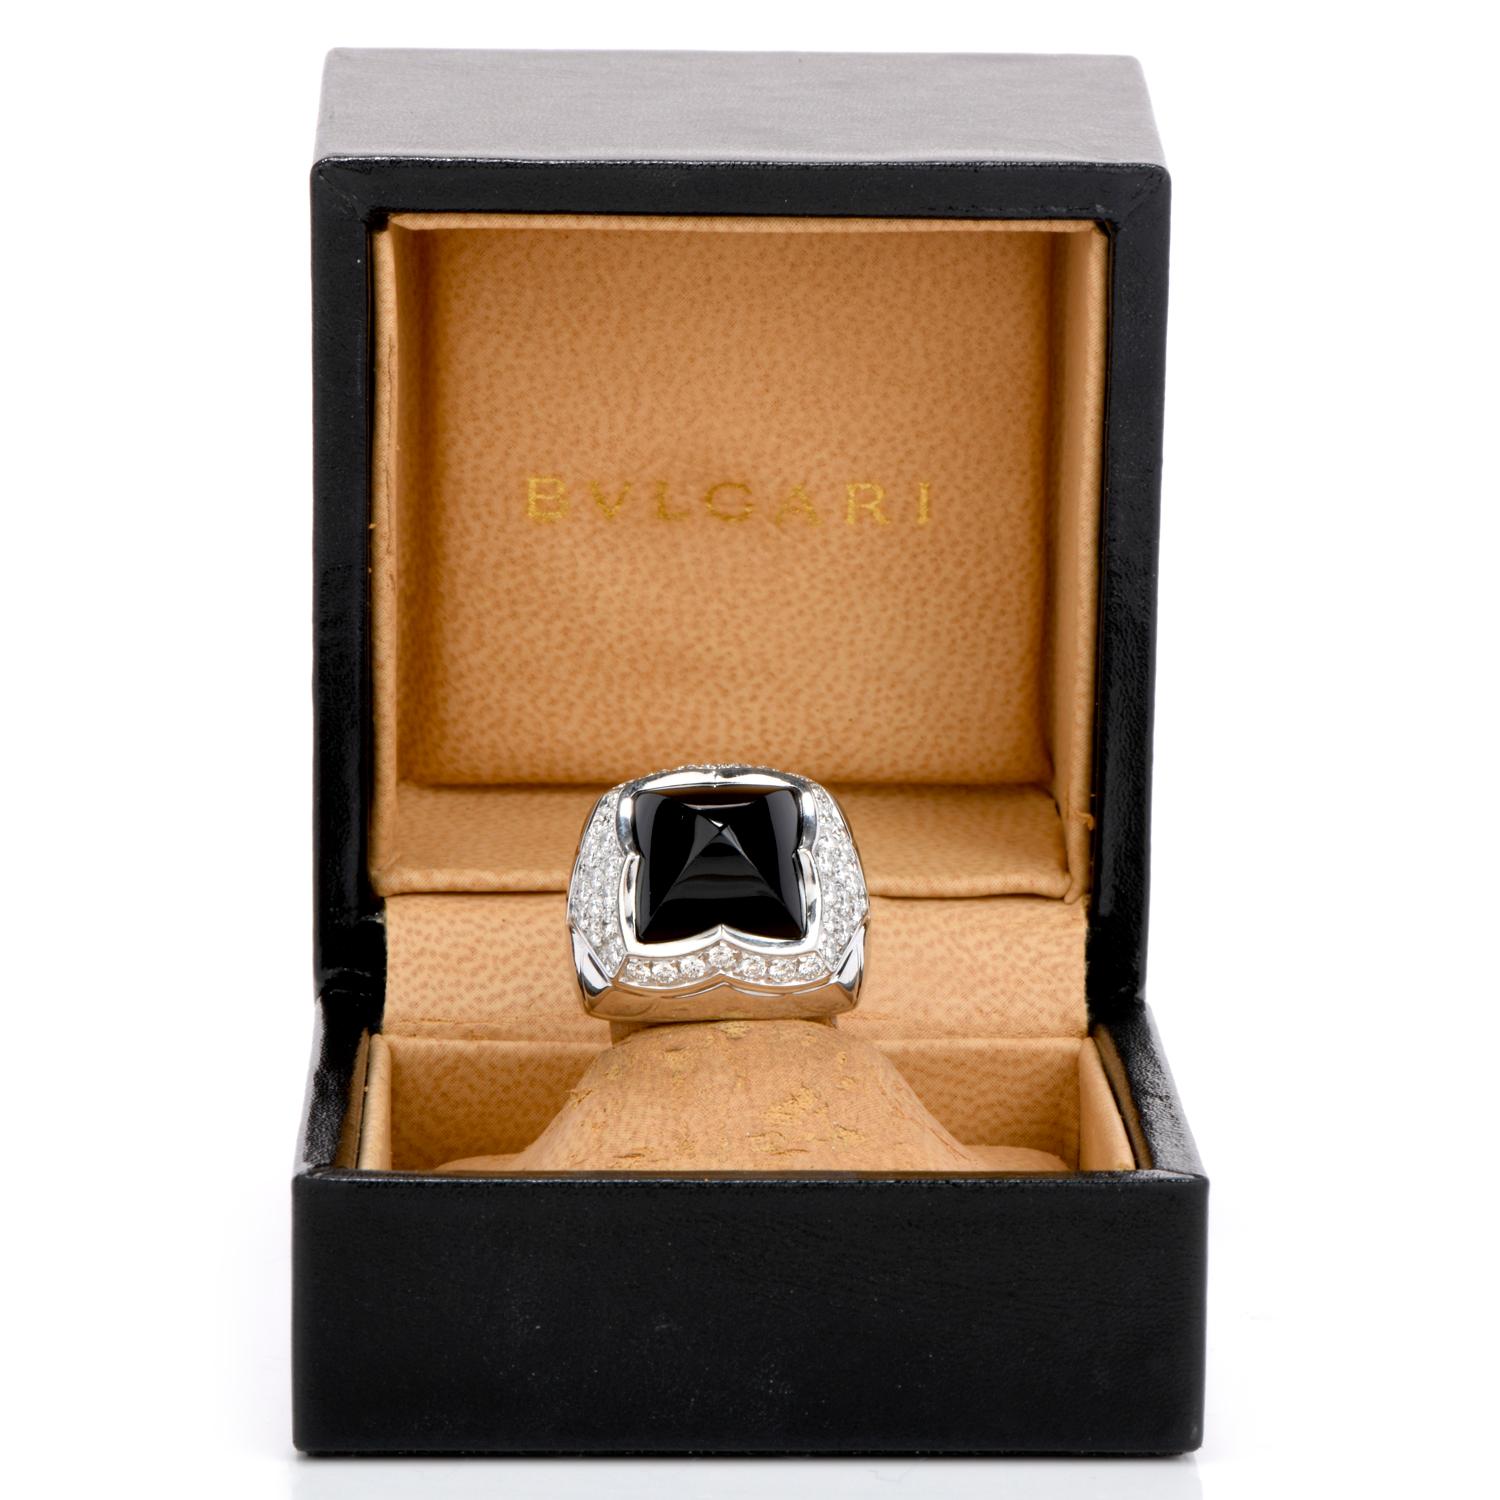 Bvlgari Diamond Onyx 18 Karat Gold Pyramid Cabochon Ring with Box 1